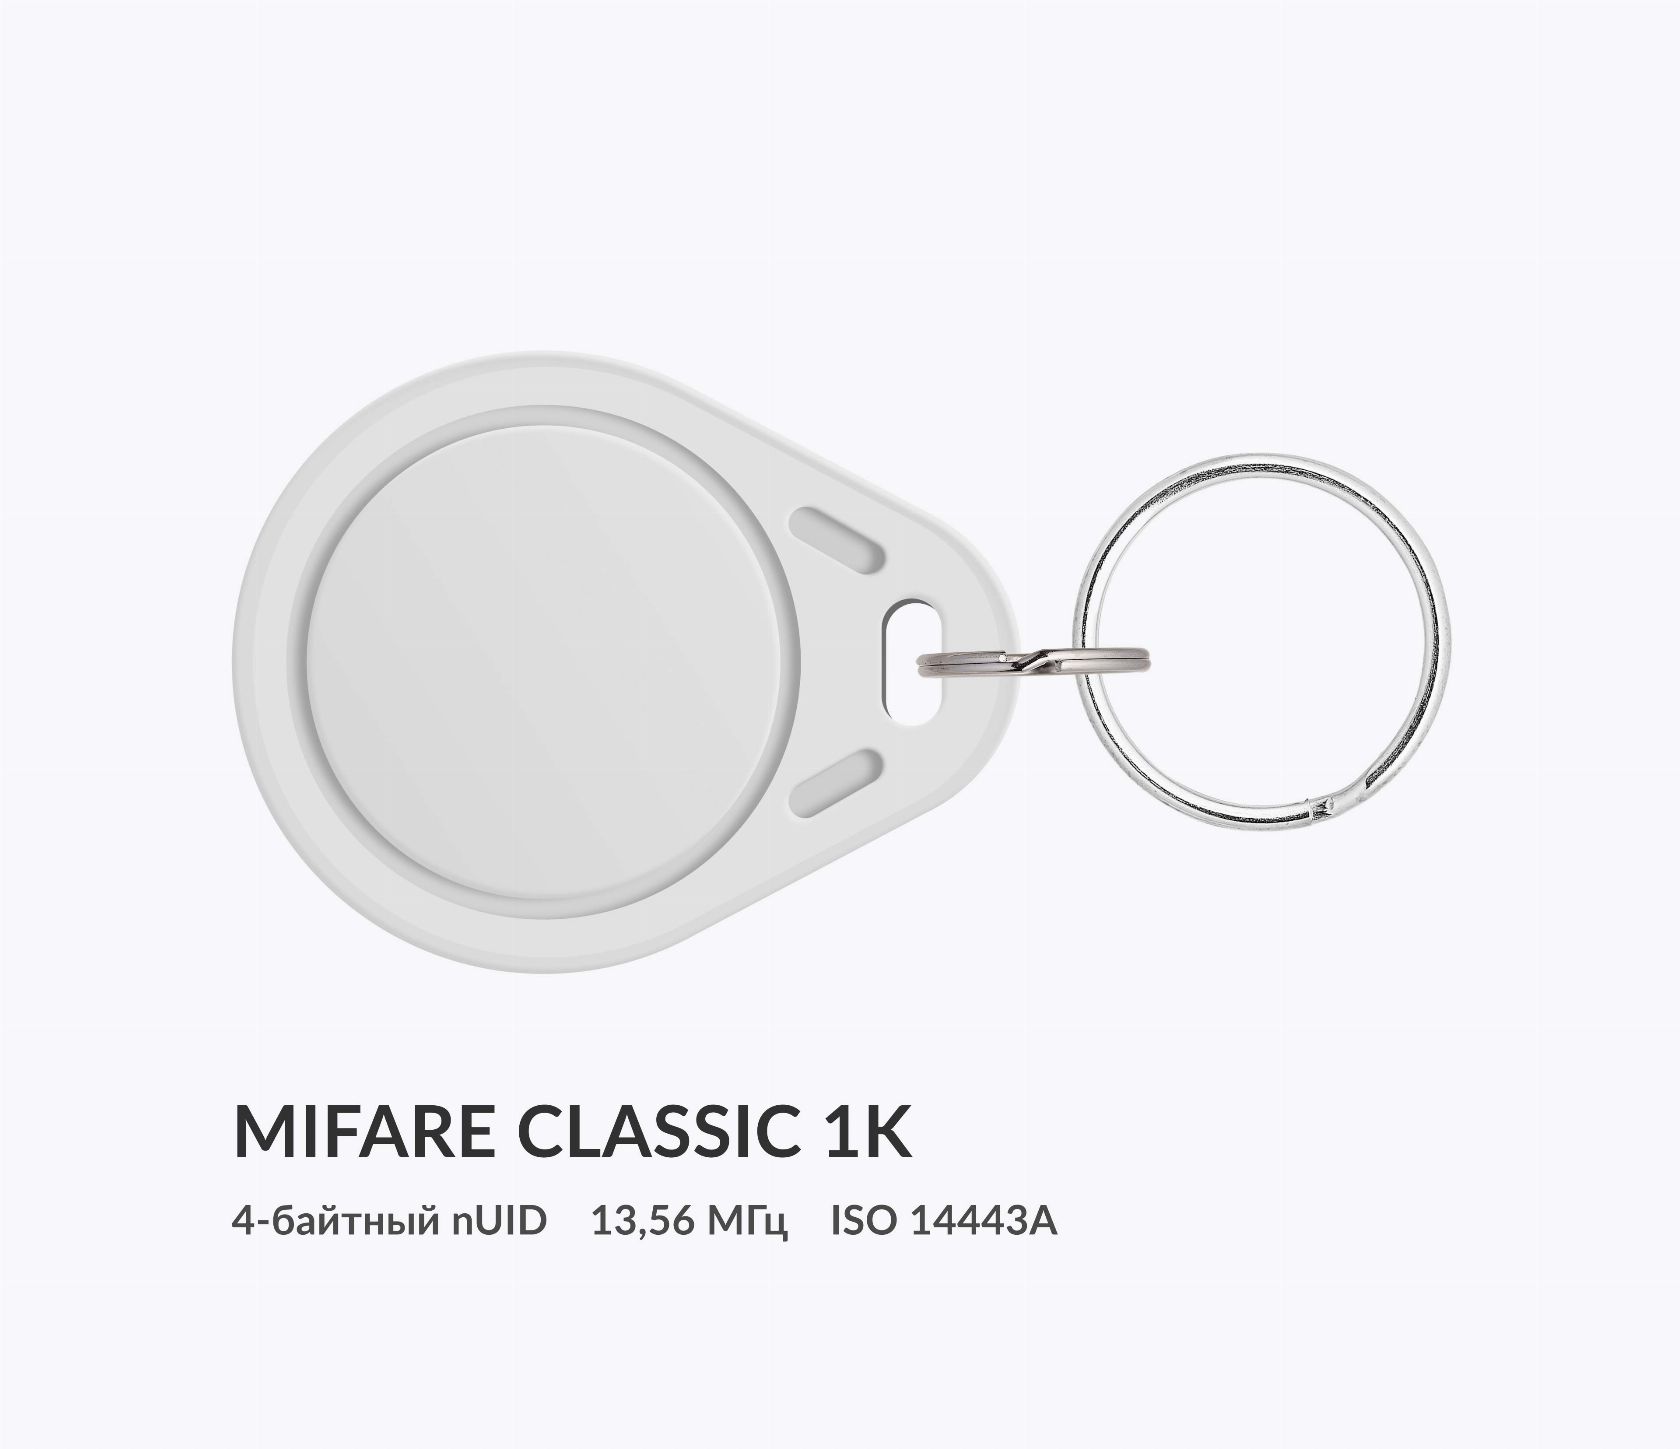 Пластиковые RFID-брелоки из ABS с чипом MIFARE Classic 1k 4 byte UID